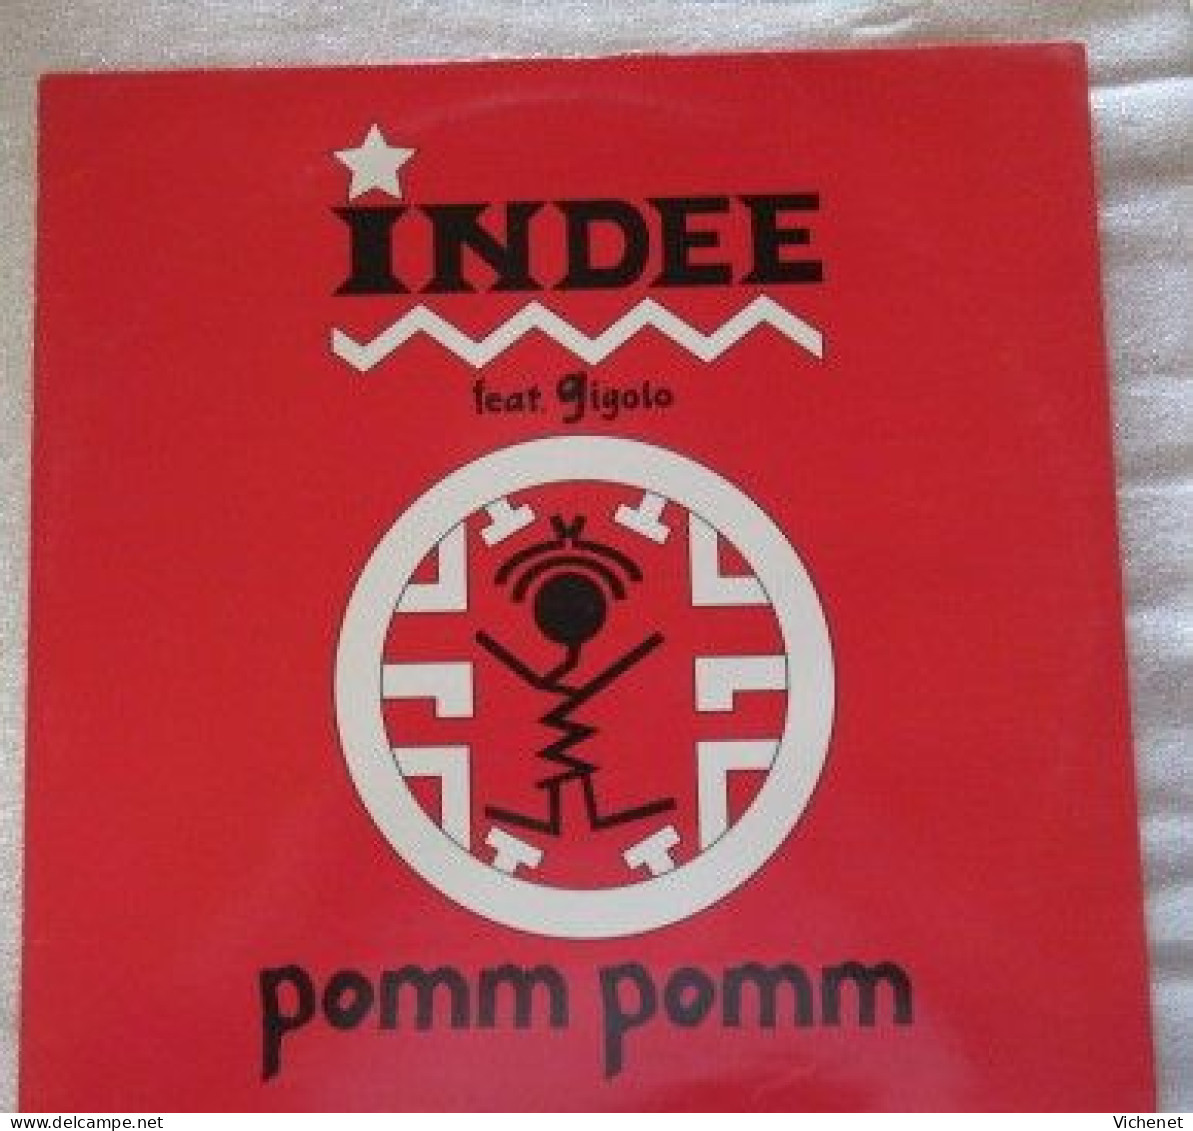 Indee  Feat. Gigolo  – Pomm Pomm - Maxi - 45 Rpm - Maxi-Single